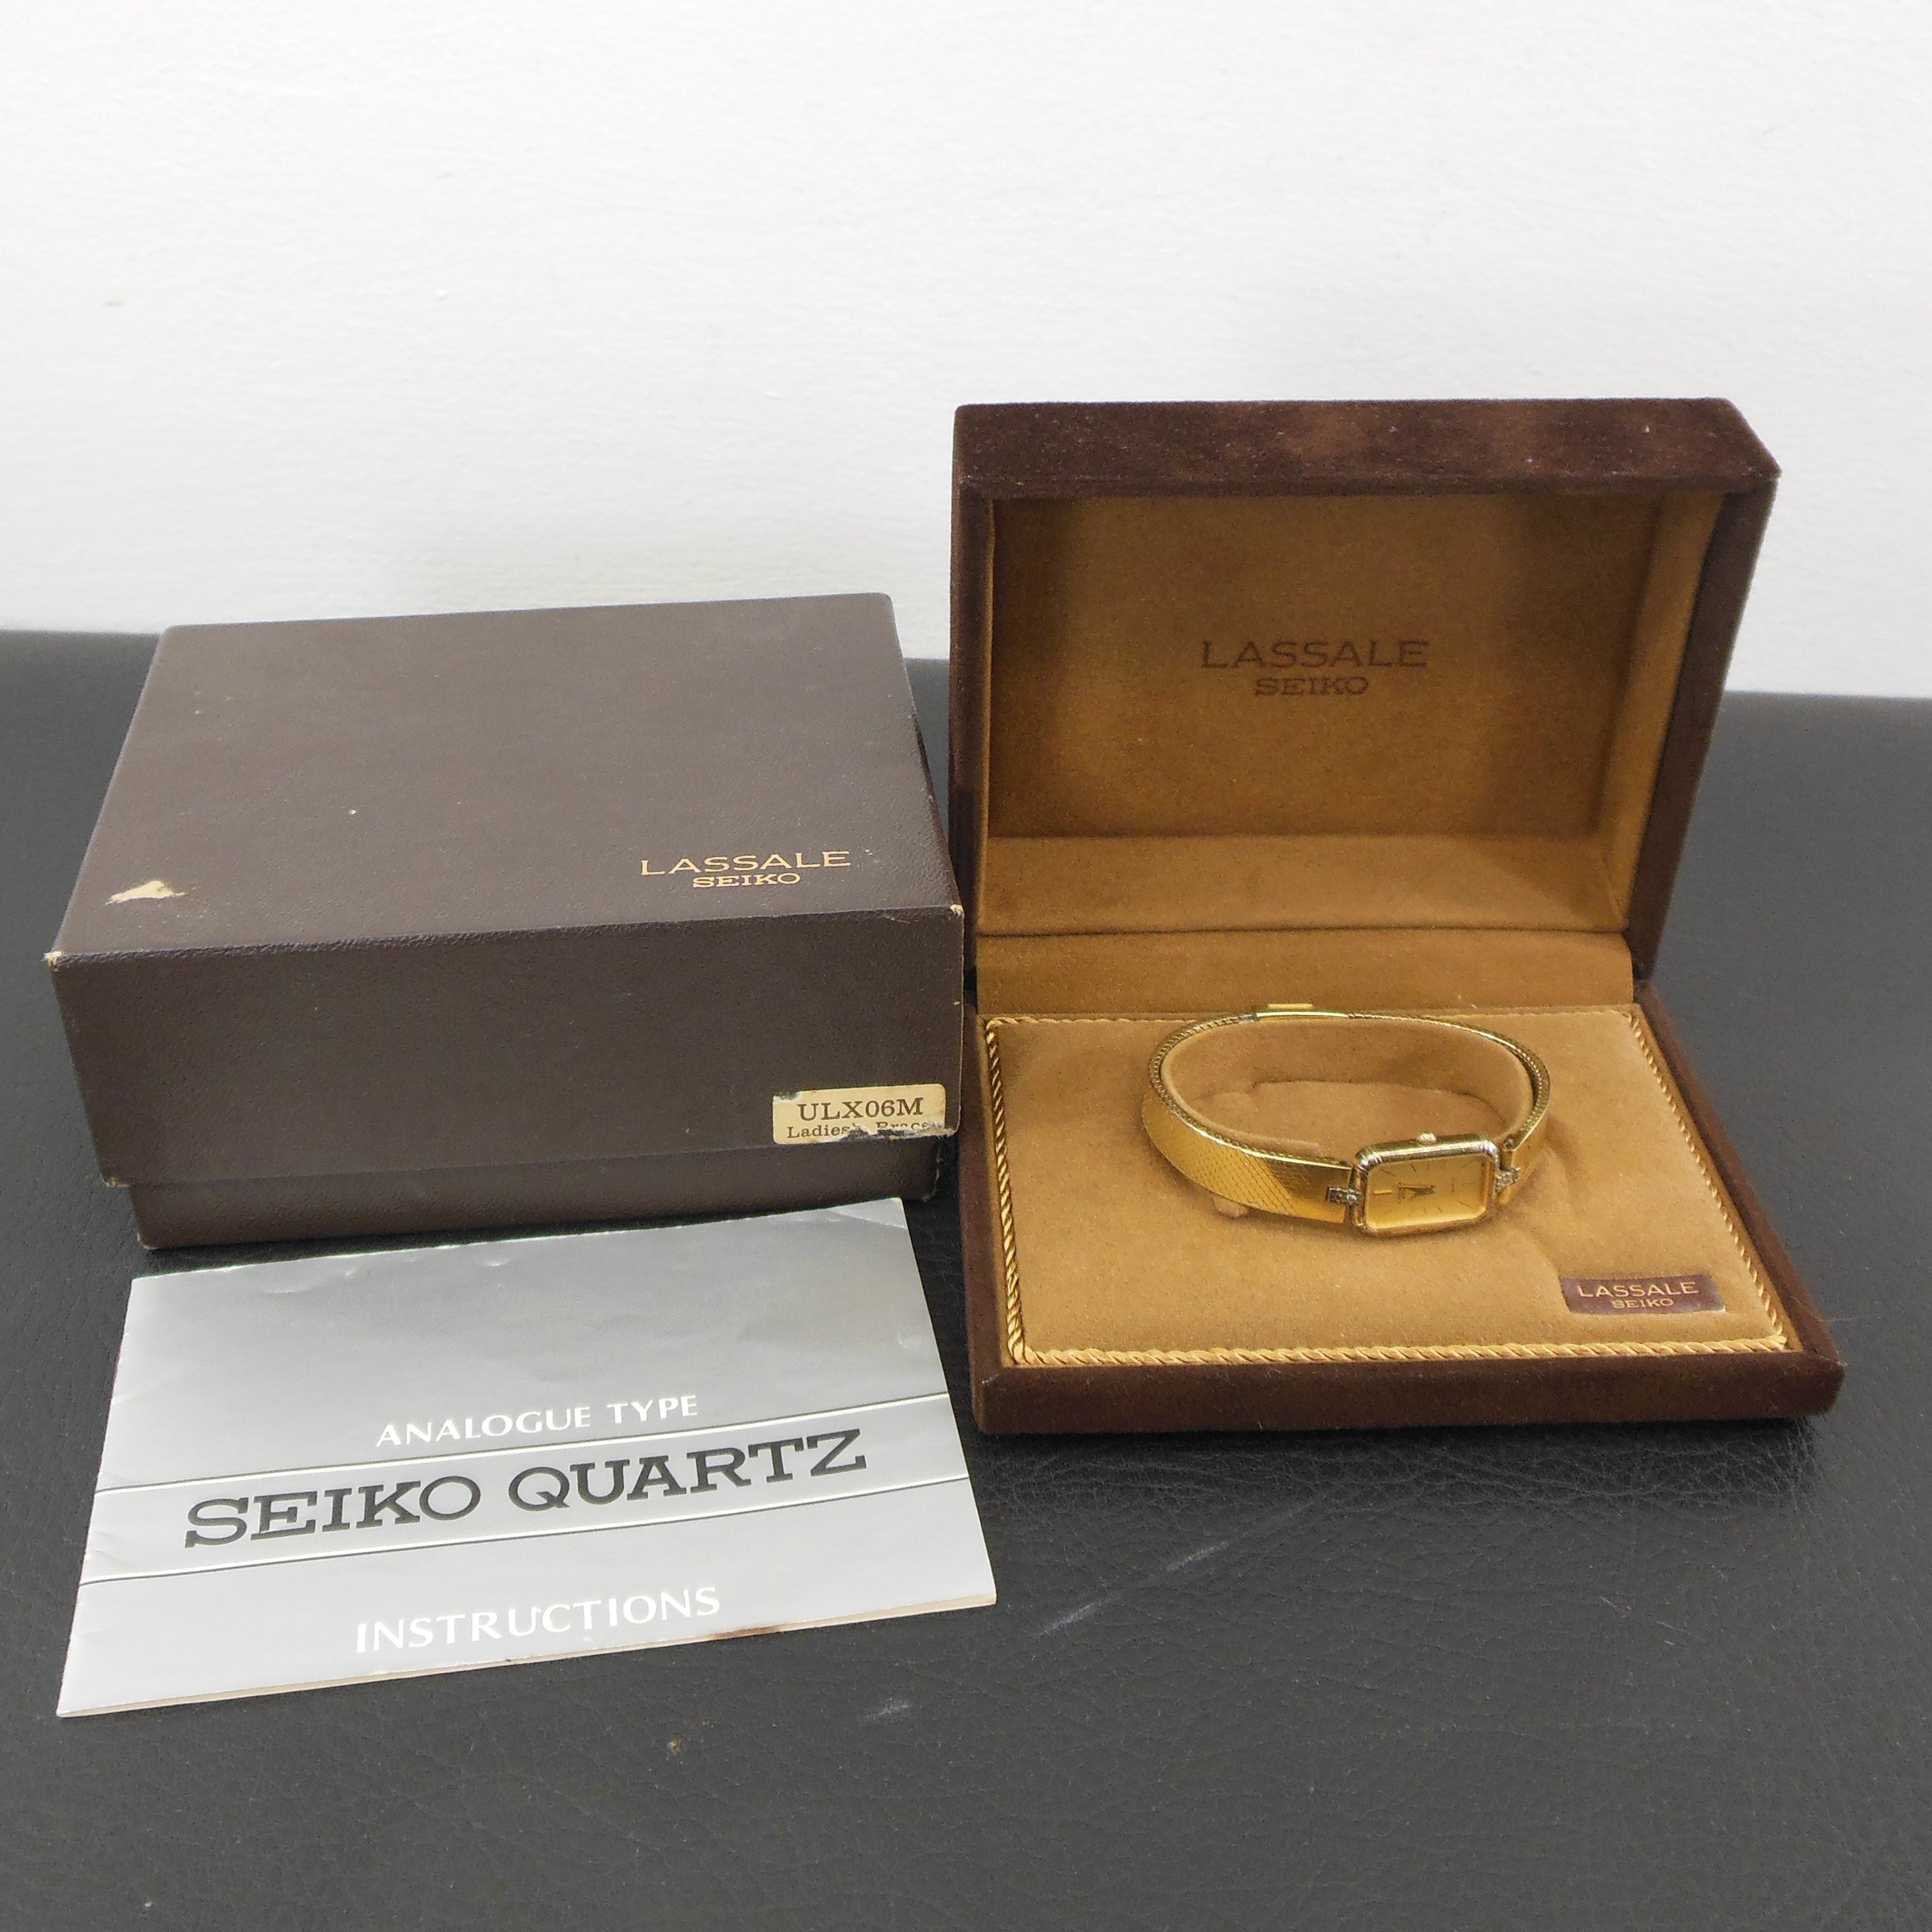 Seiko LaSalle 1980's Women's Gold Filled Diamond Watch Boxed